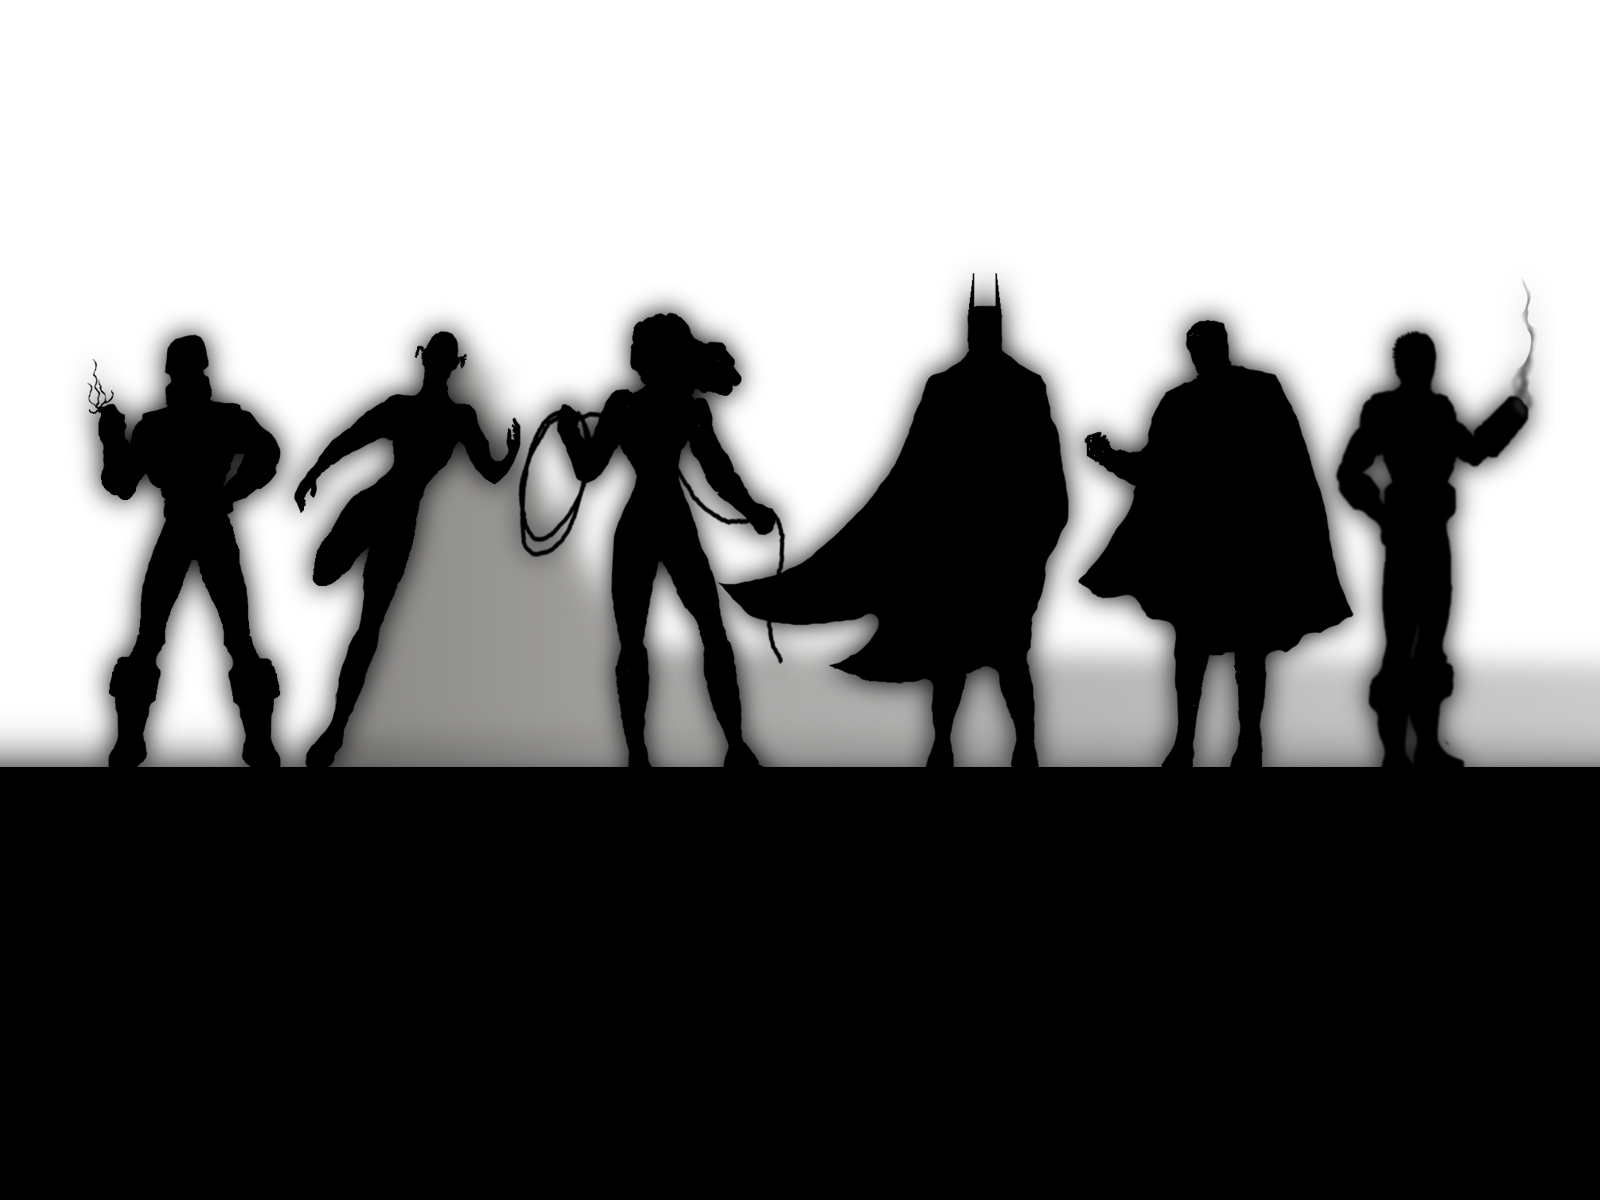 Anime 1600x1200 Nuclear (JLA) silhouette Justice League DC Extended Universe movies Wonder Woman Batman Superman Cyborg (DC Comics) artwork superheroines superhero